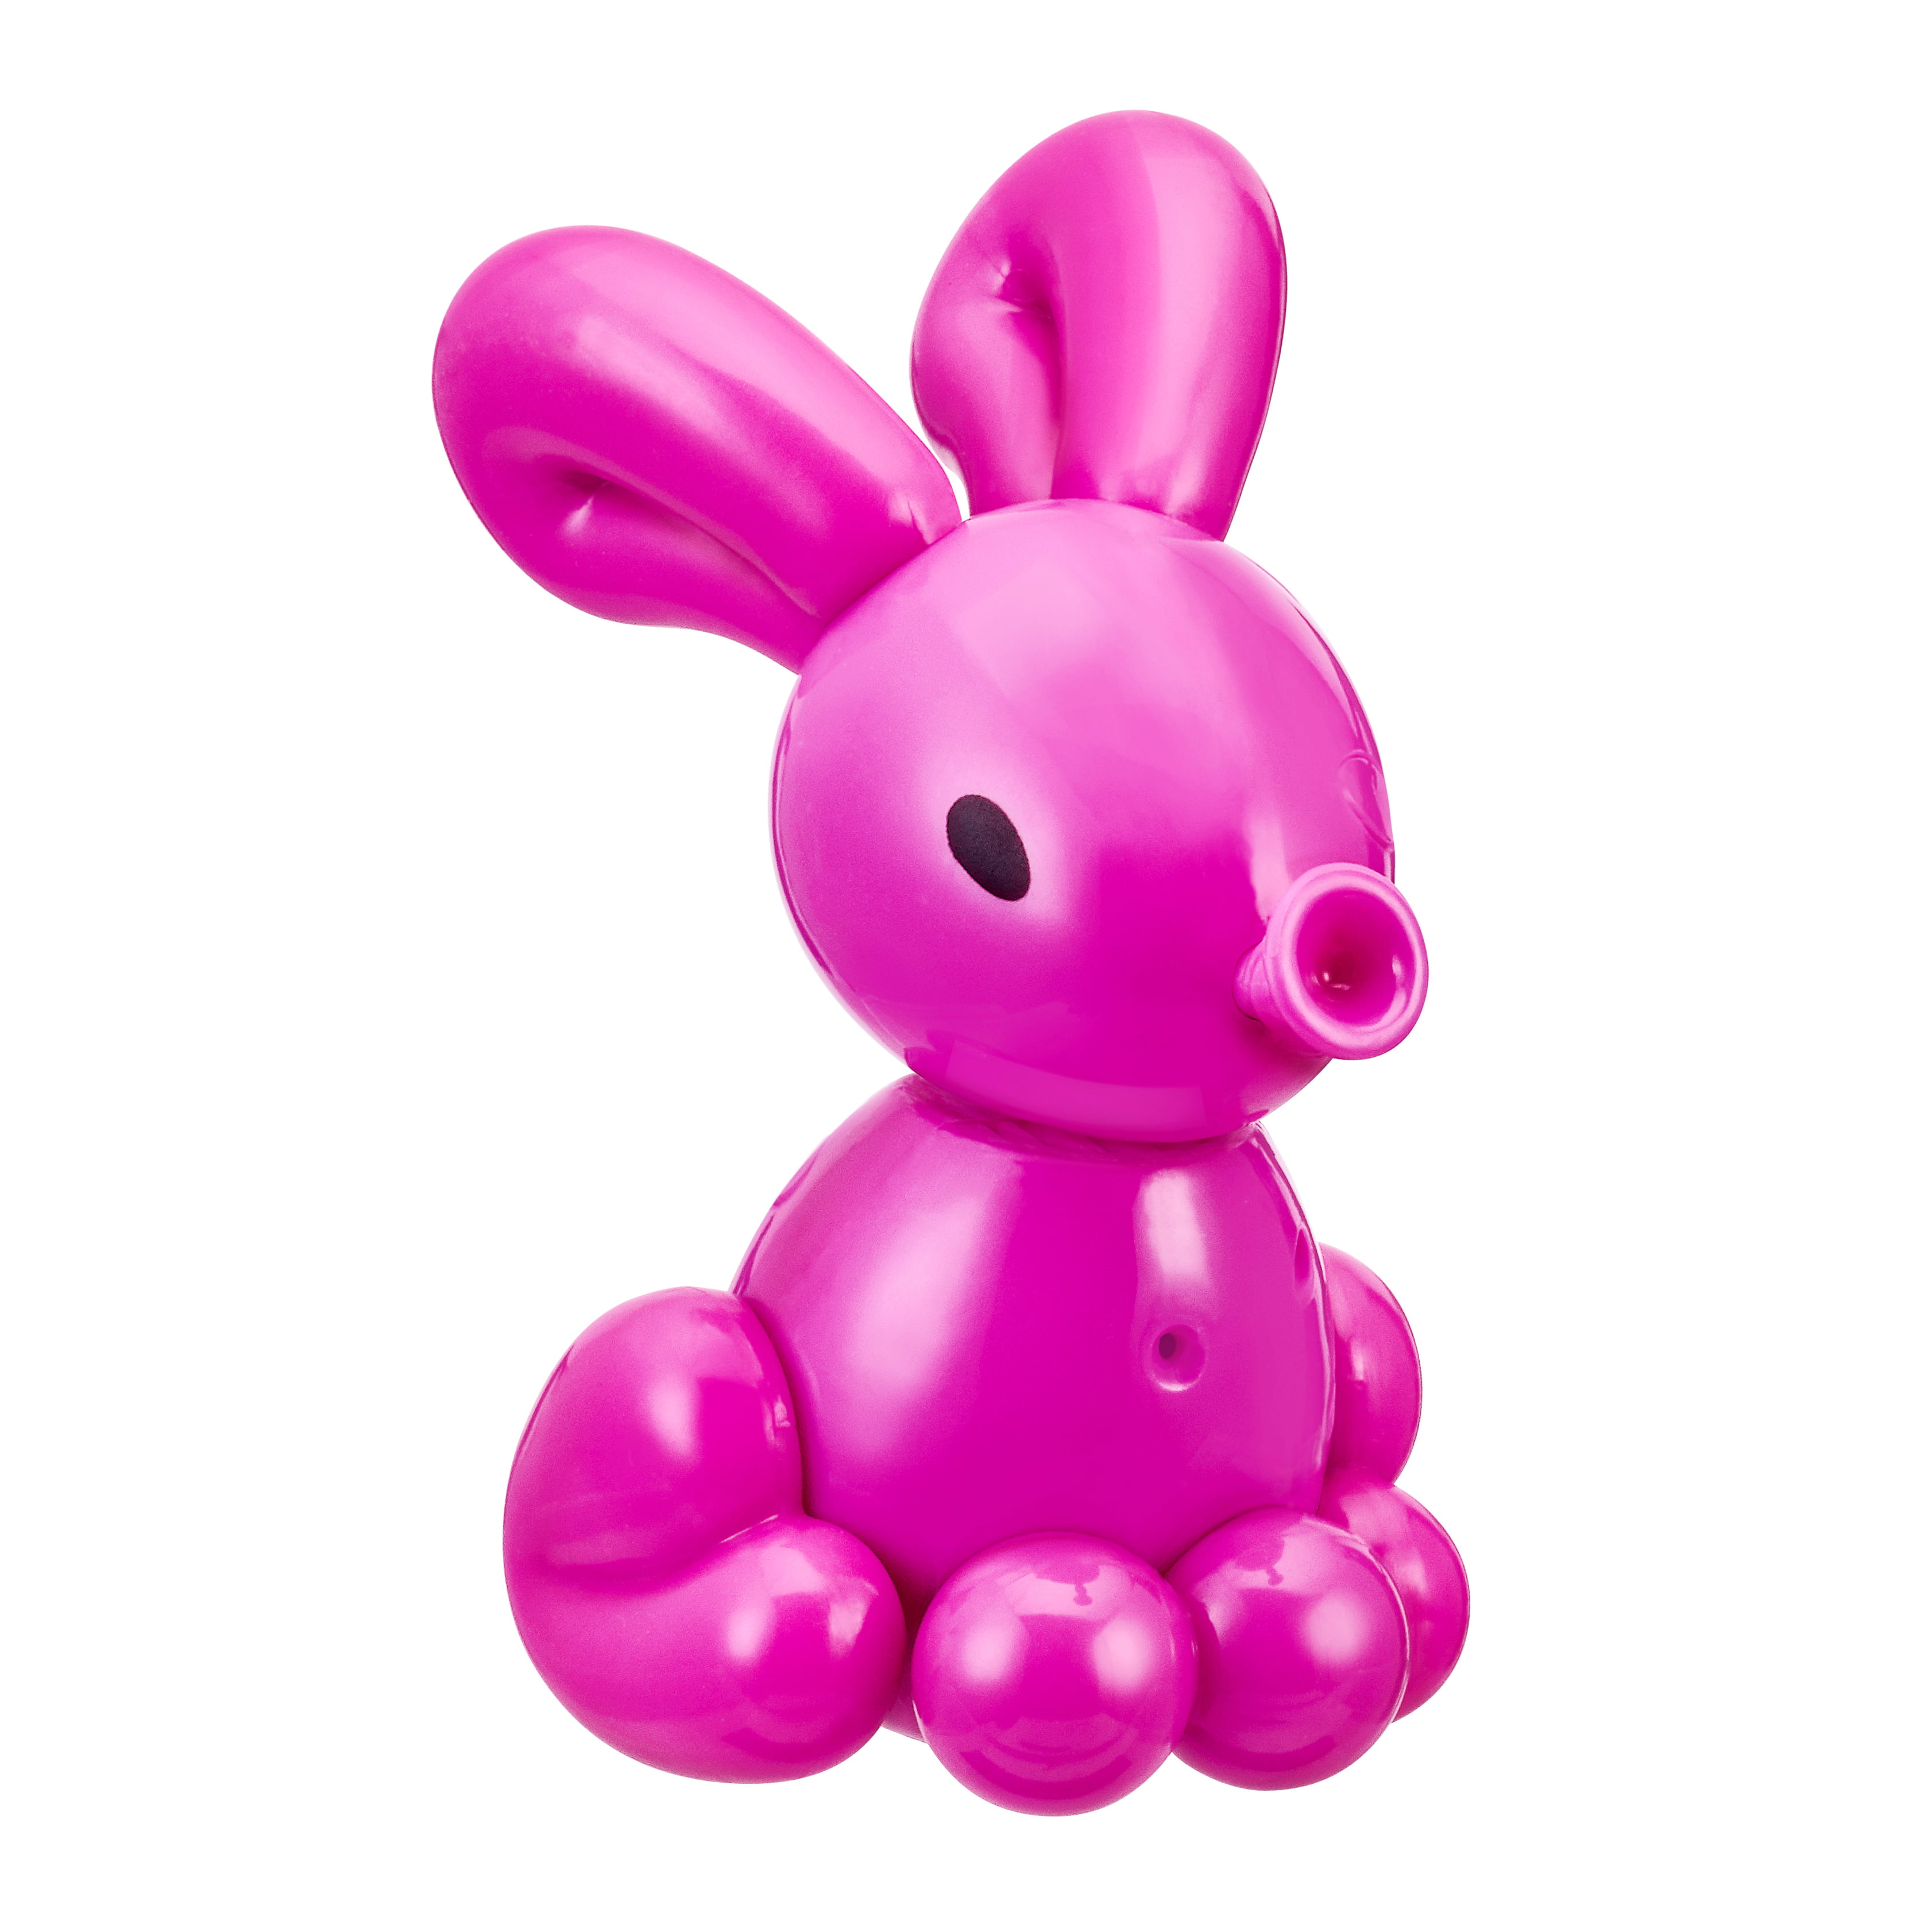 Rabbit balloon ride to pop